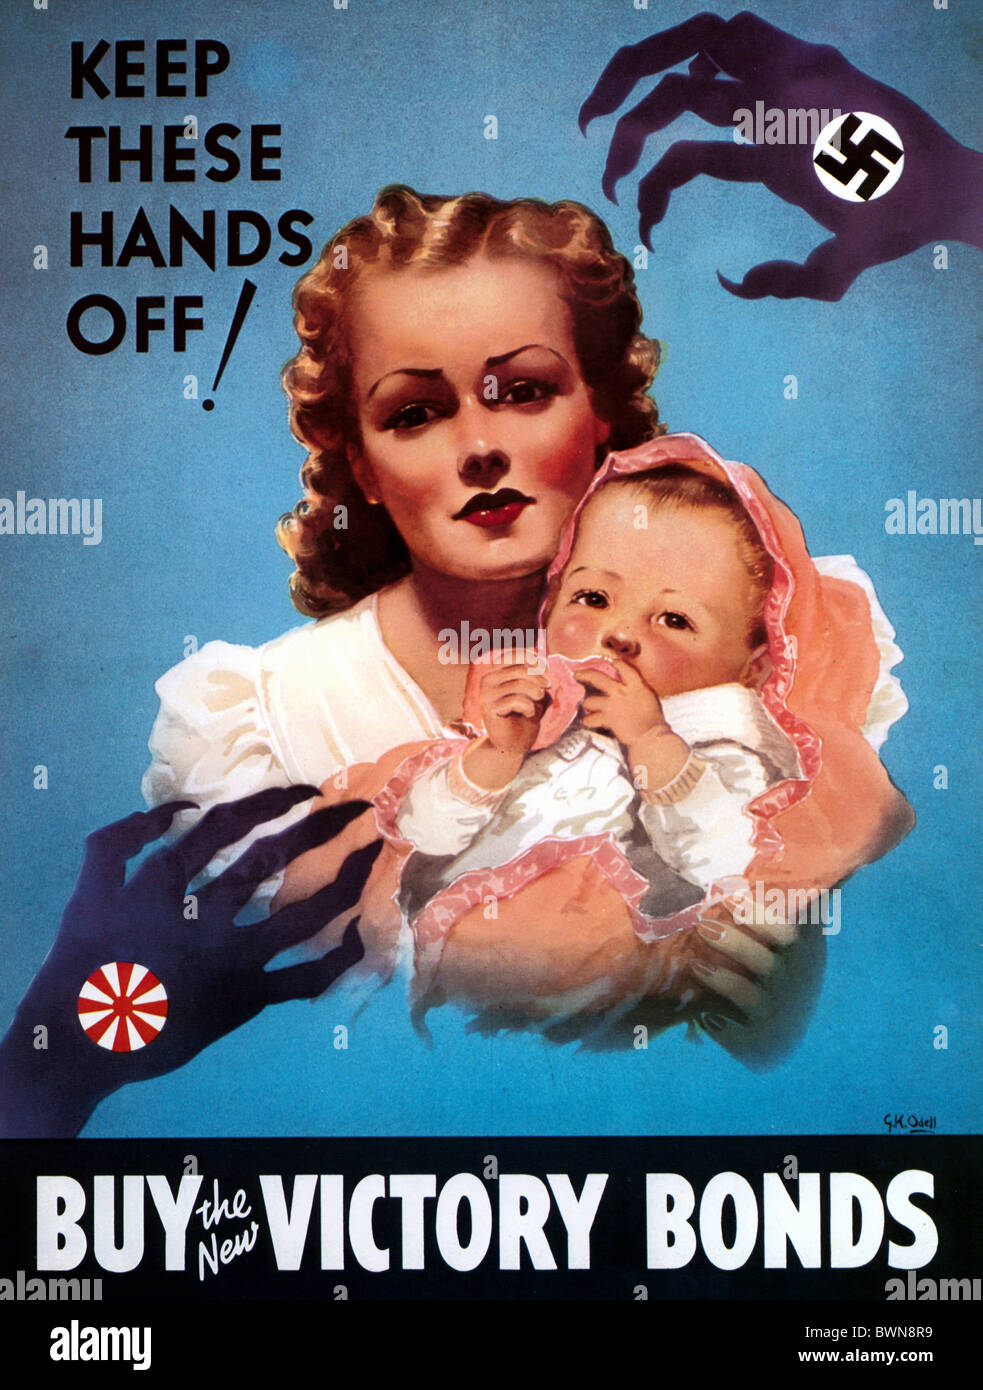 Ww2 Propaganda Poster America Stock Photos Ww2 Propaganda Poster